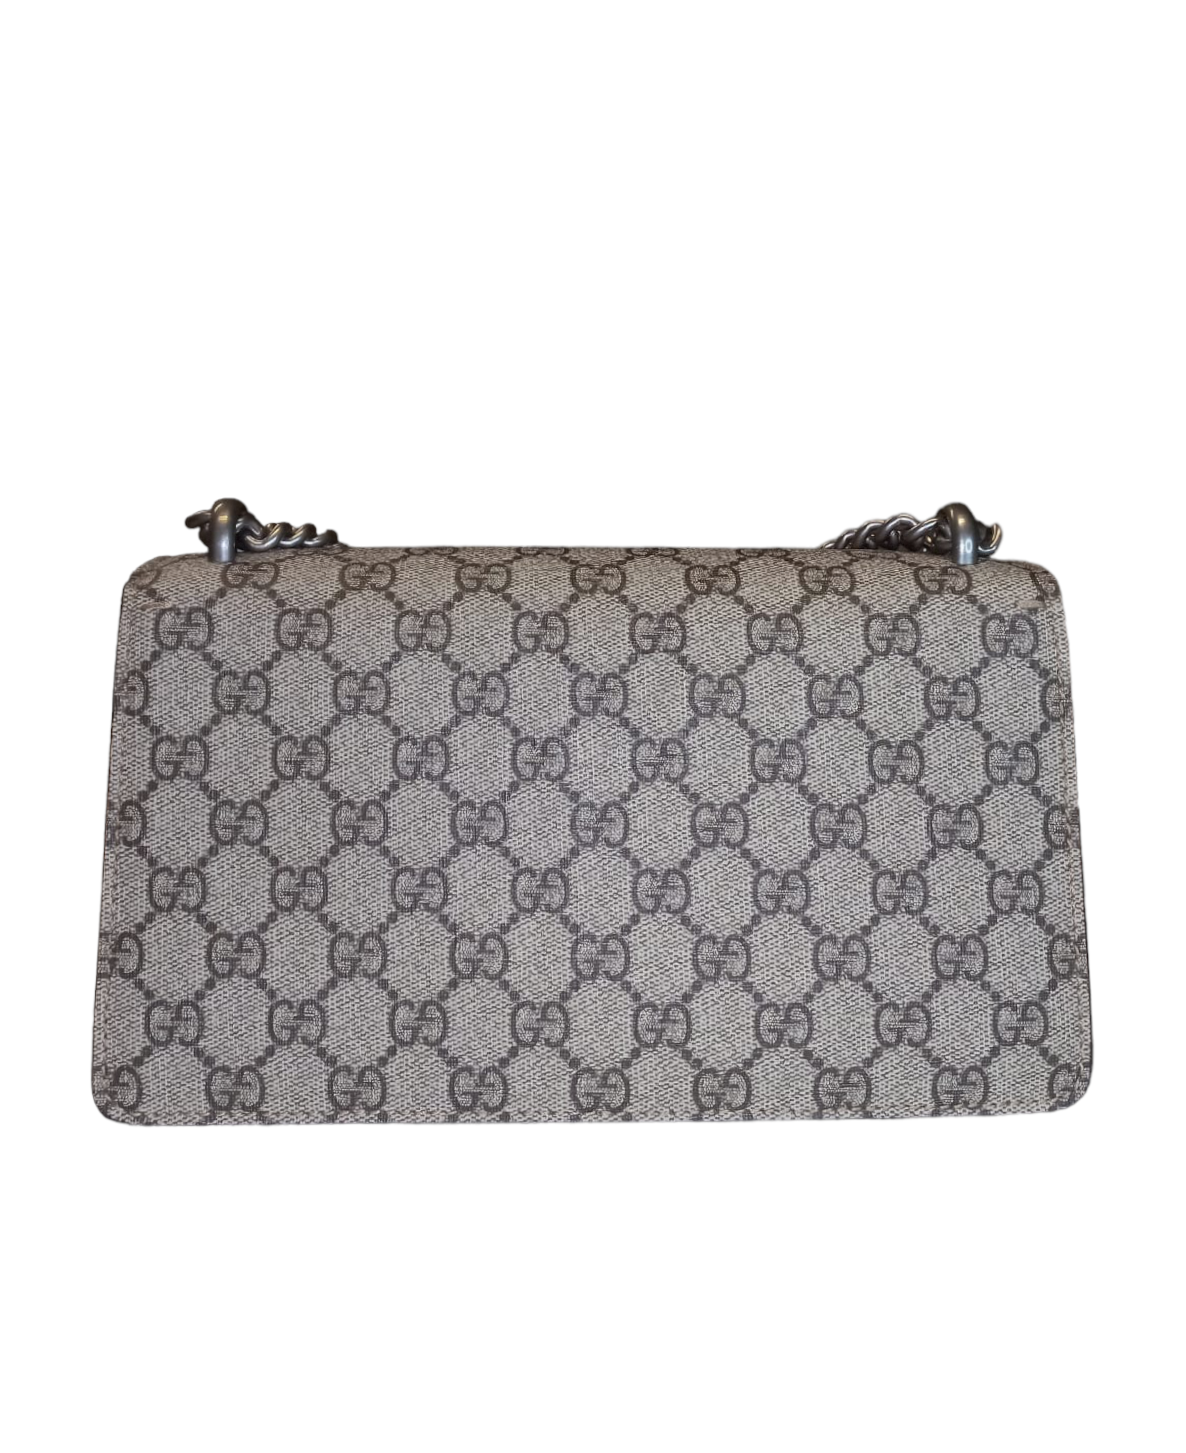 Gucci Supreme Small Dionysus GG Shoulder Bag Beige/Brown